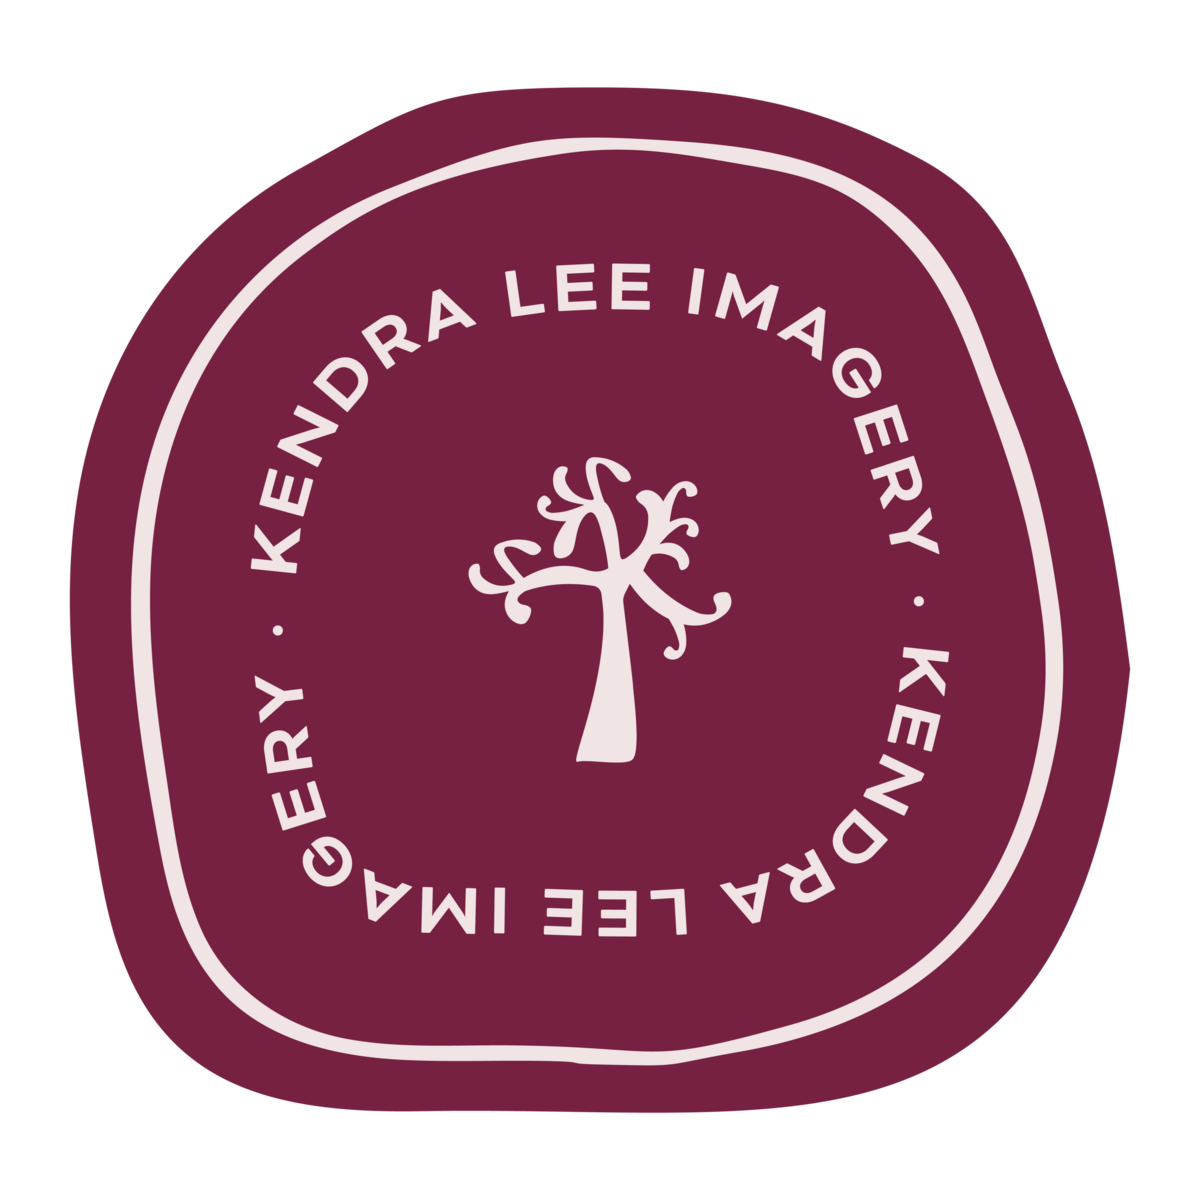 Circle logo that says Kendra Lee Imagery.